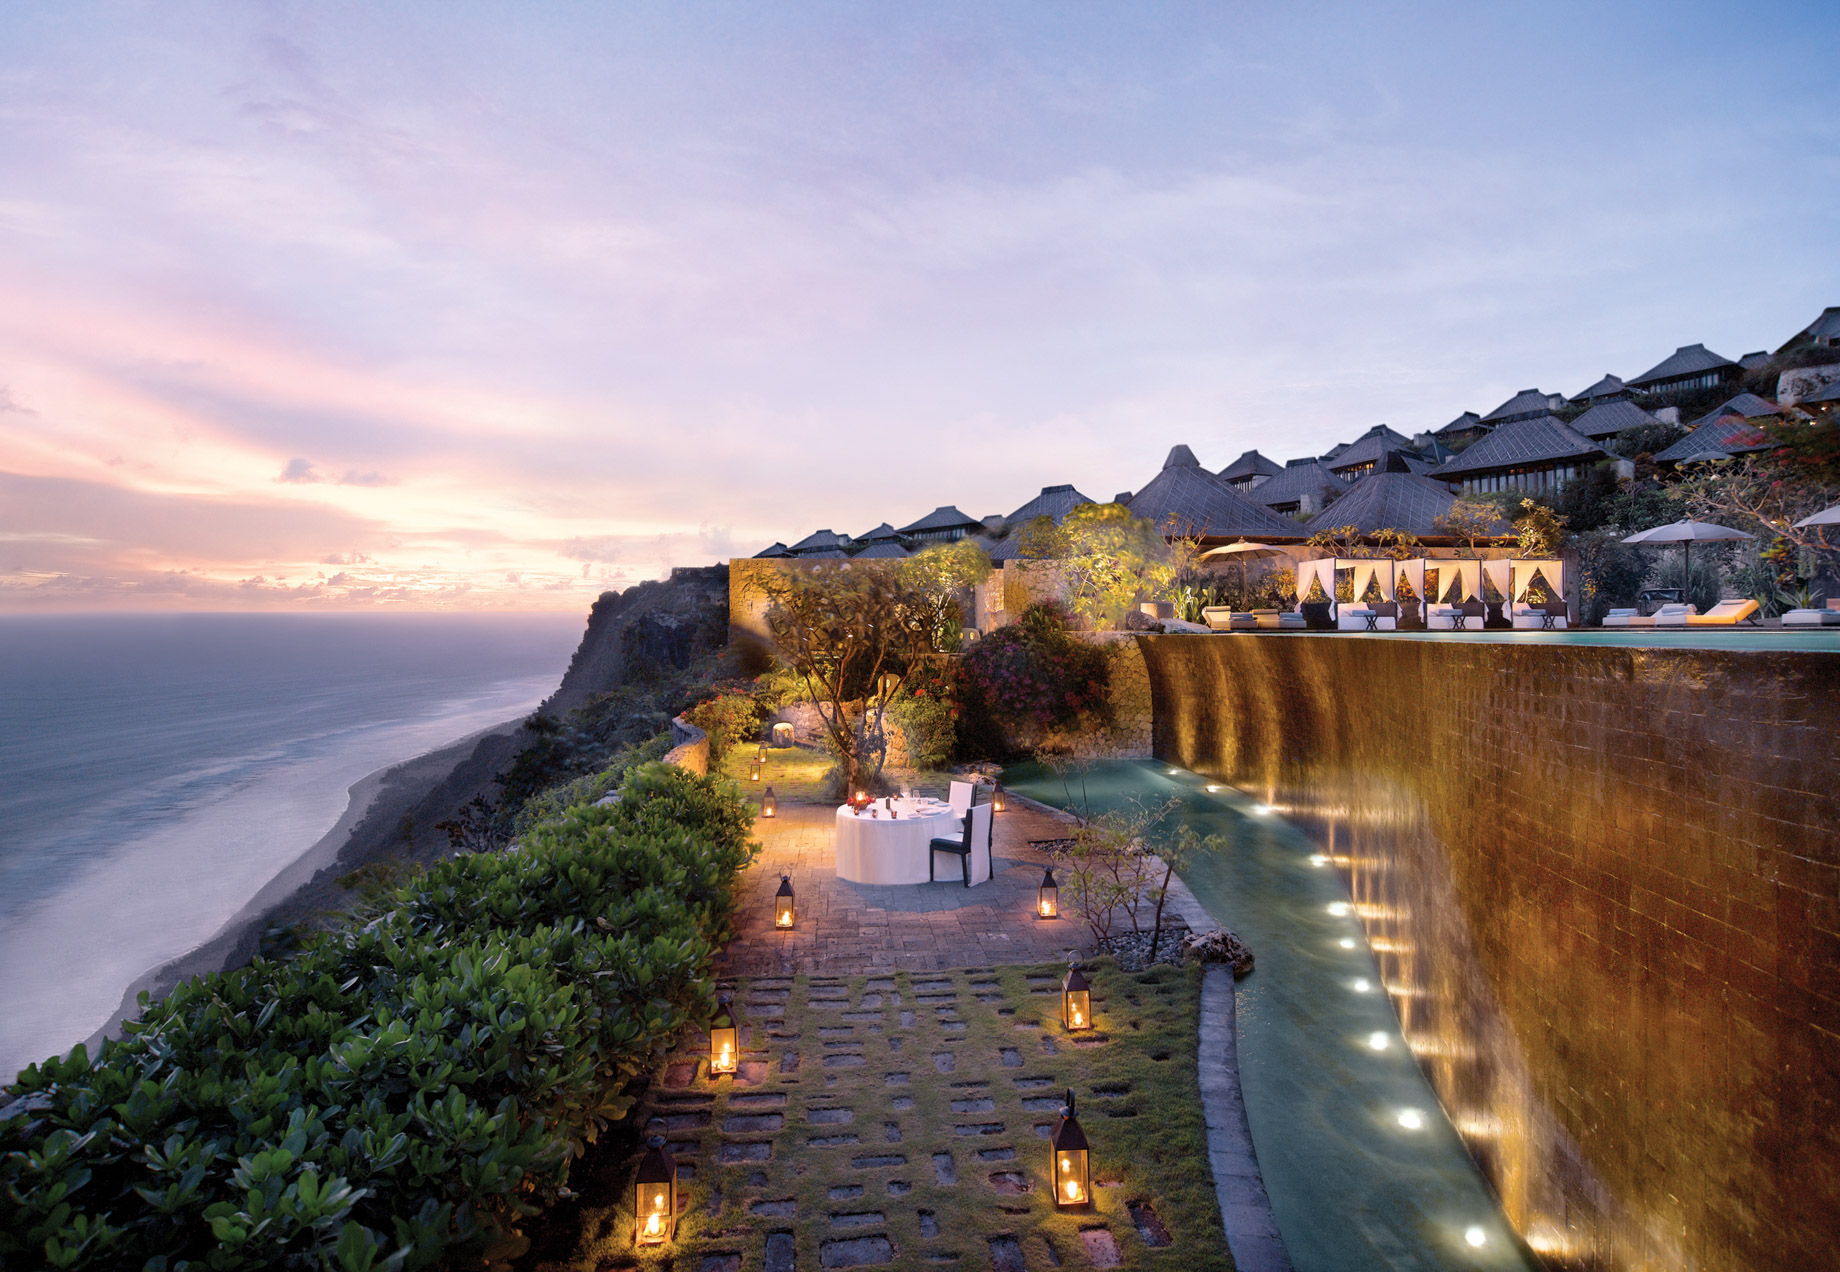 Bvlgari Resort Bali – Uluwatu, Bali, Indonesia – Lower Pool Cliff Ocean View Sunset